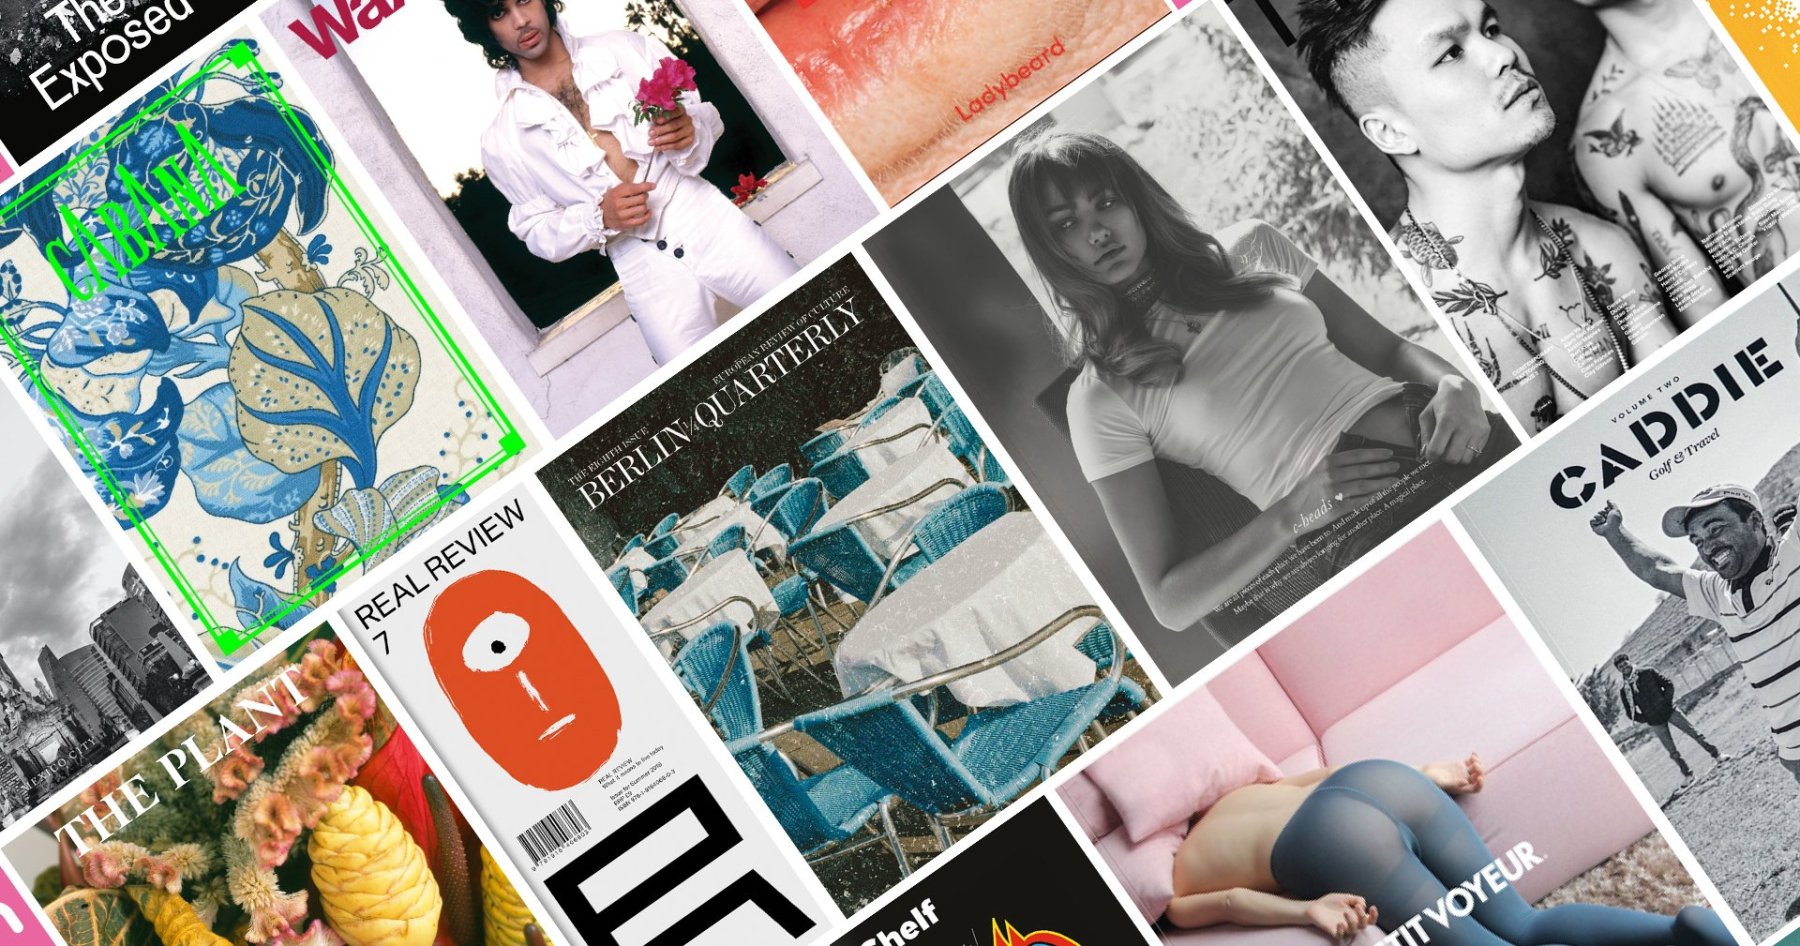 Leila Lowfire Porno Full - 100 Best Indie Magazines You've Never Heard Of - InsideHook